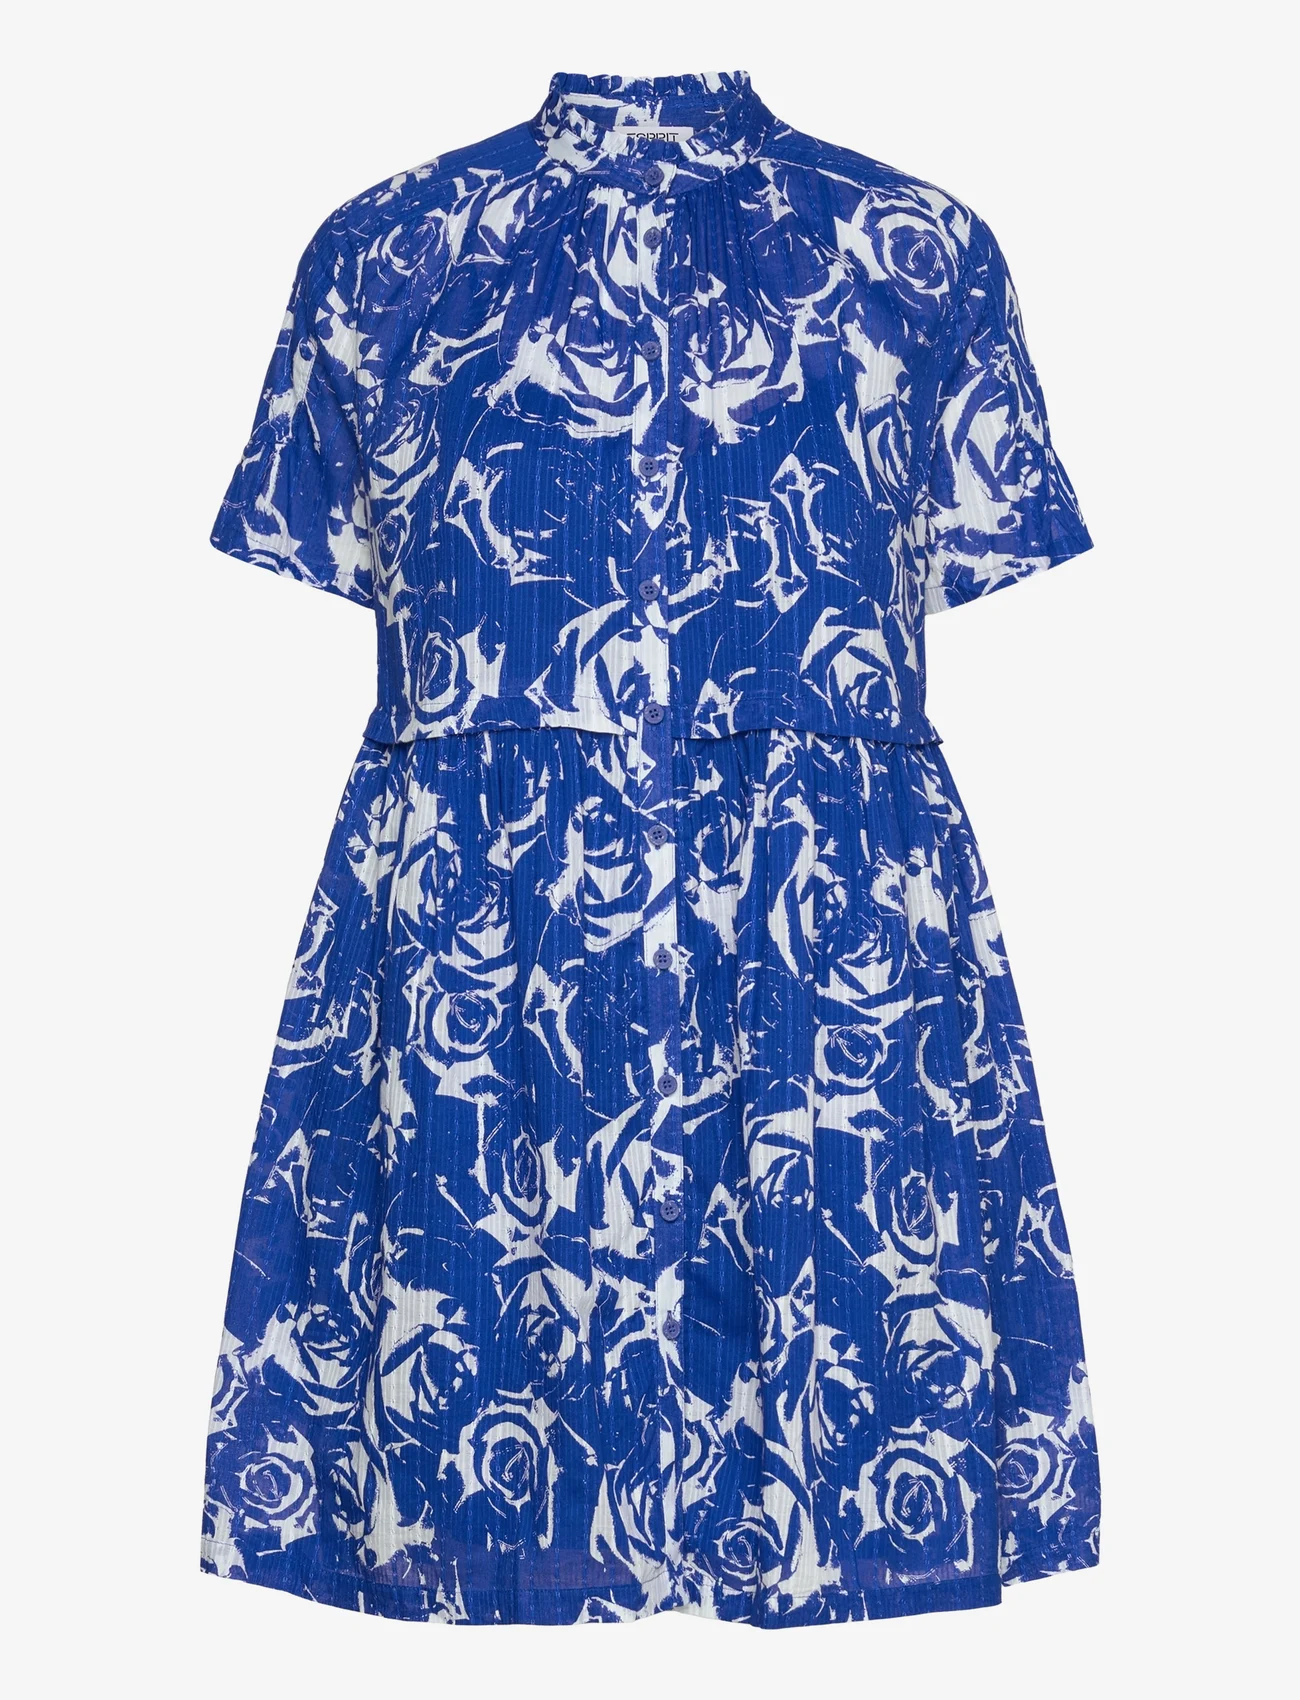 Esprit Casual - Dresses light woven - kreklkleitas - bright blue 2 - 0